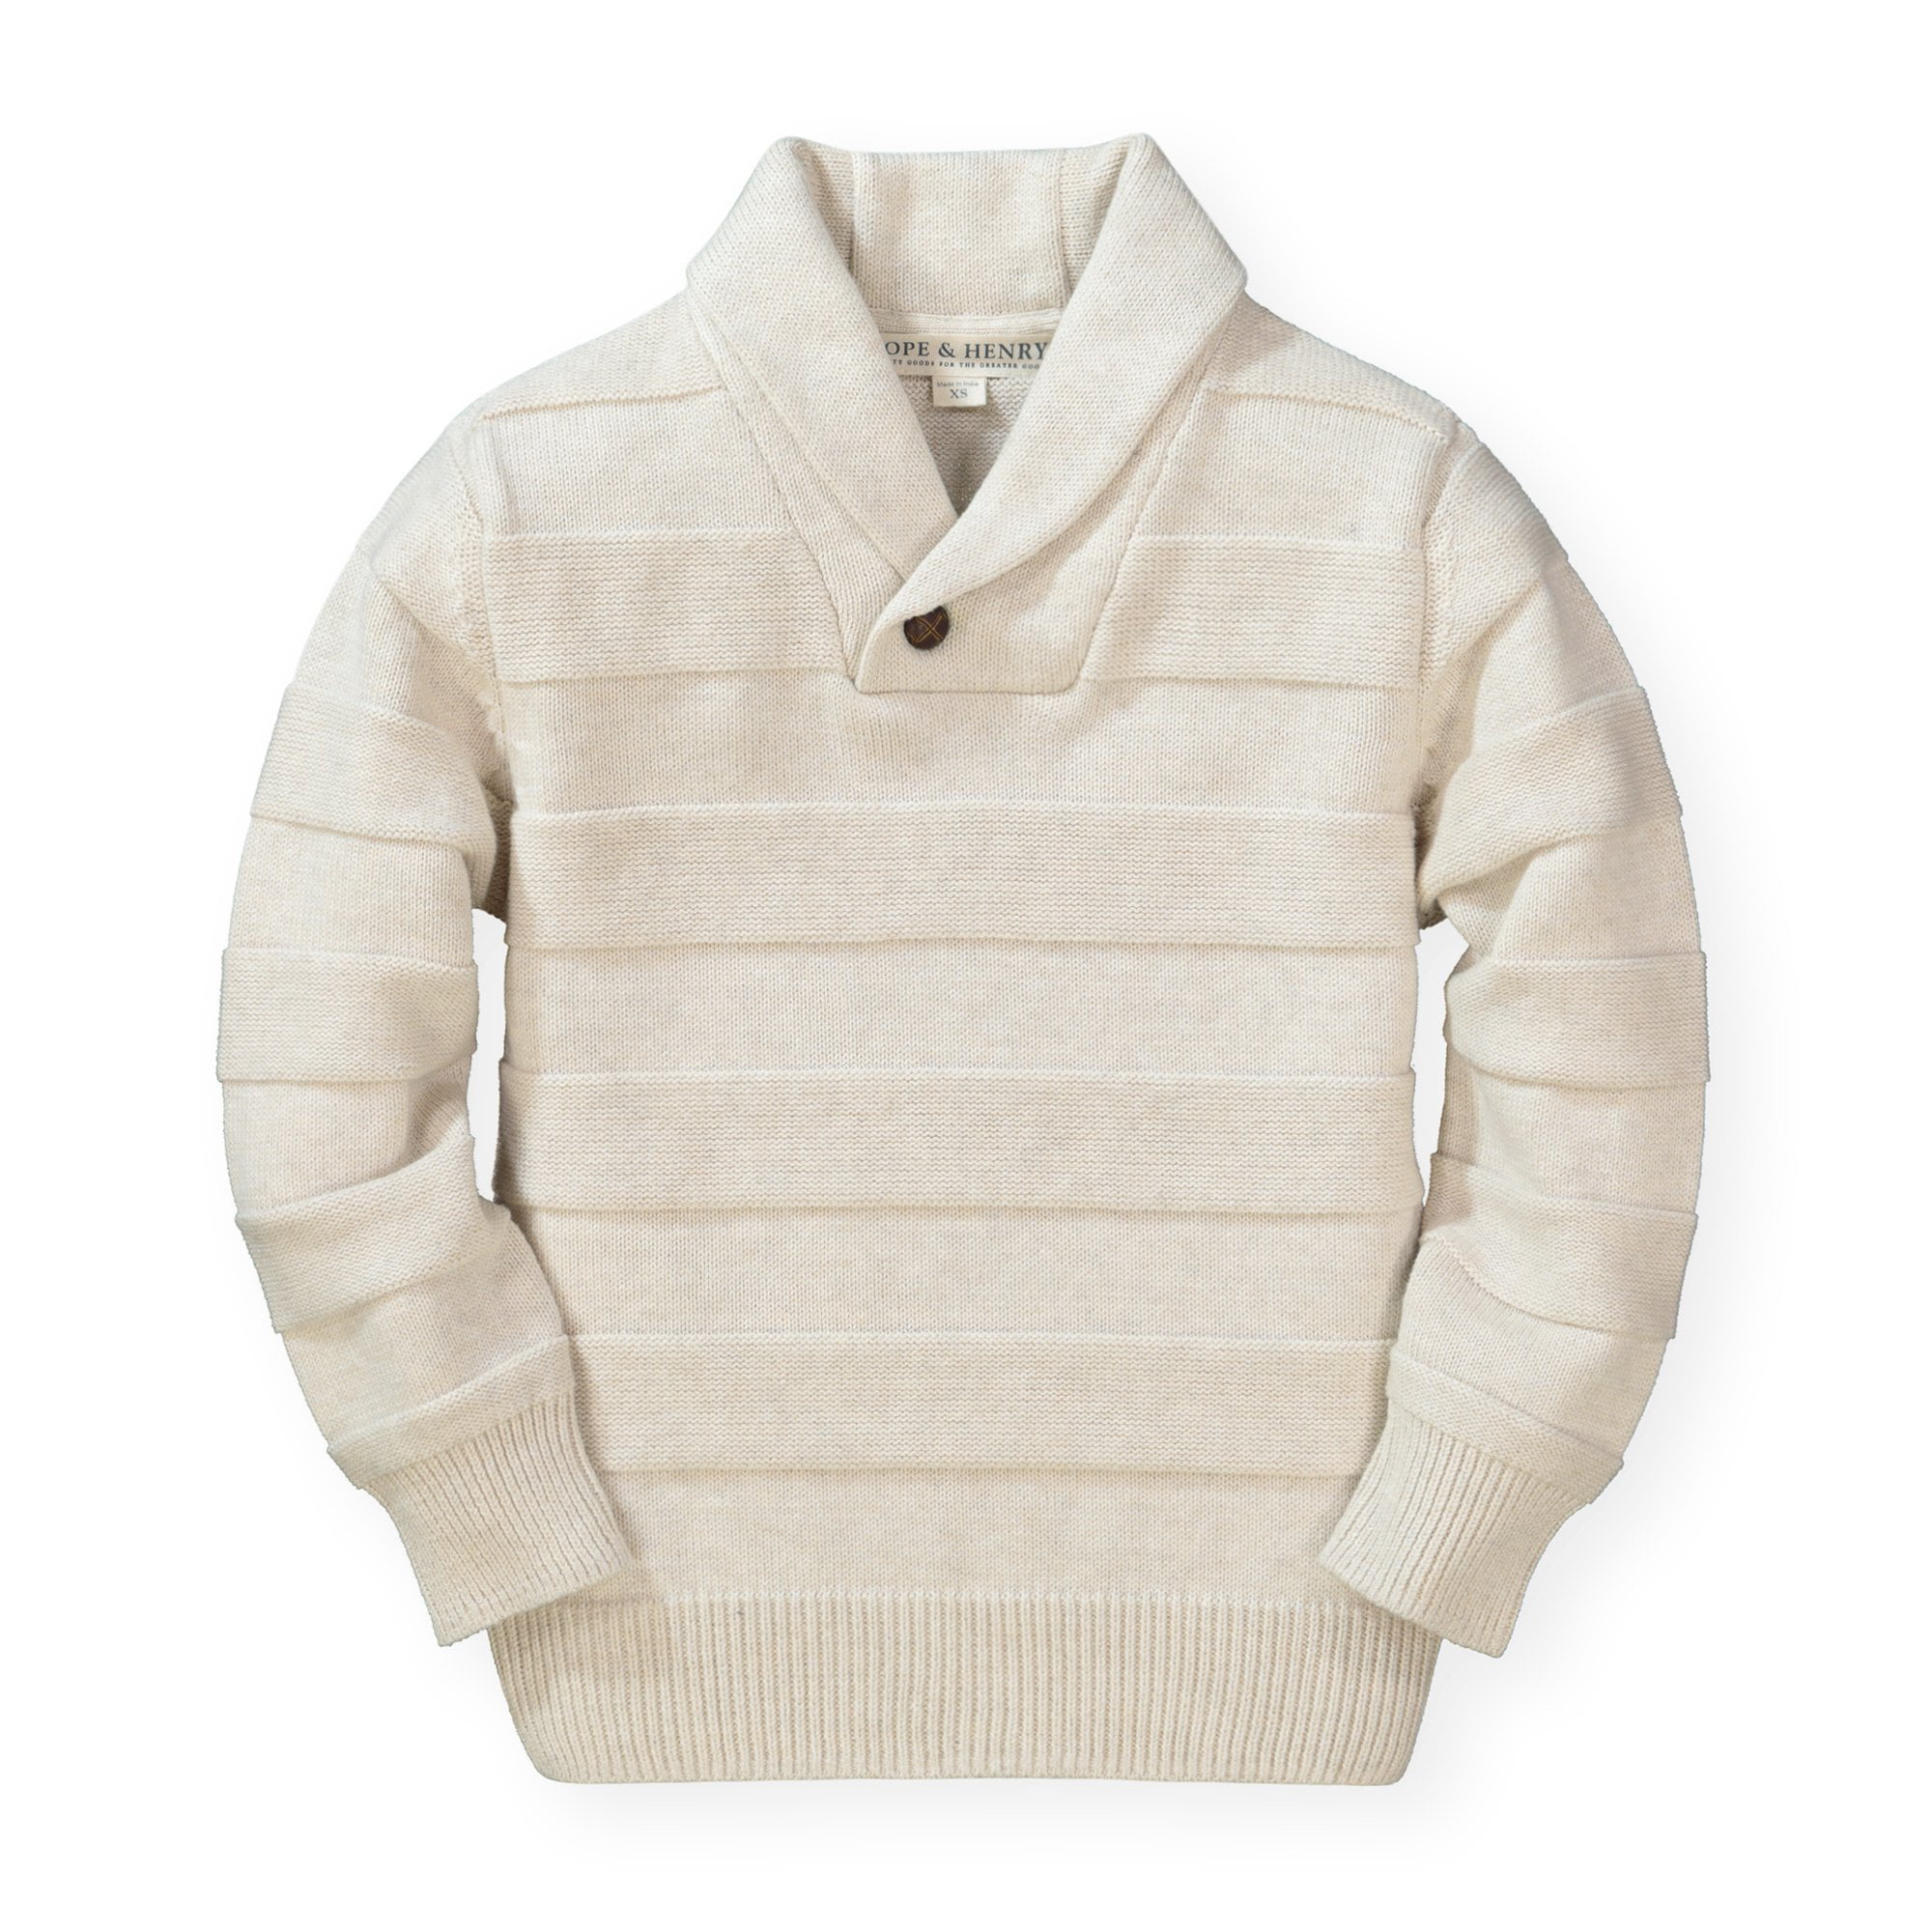 945 Strak Doen Hope & Henry Boys' Shawl Collar Sweater - Walmart.com